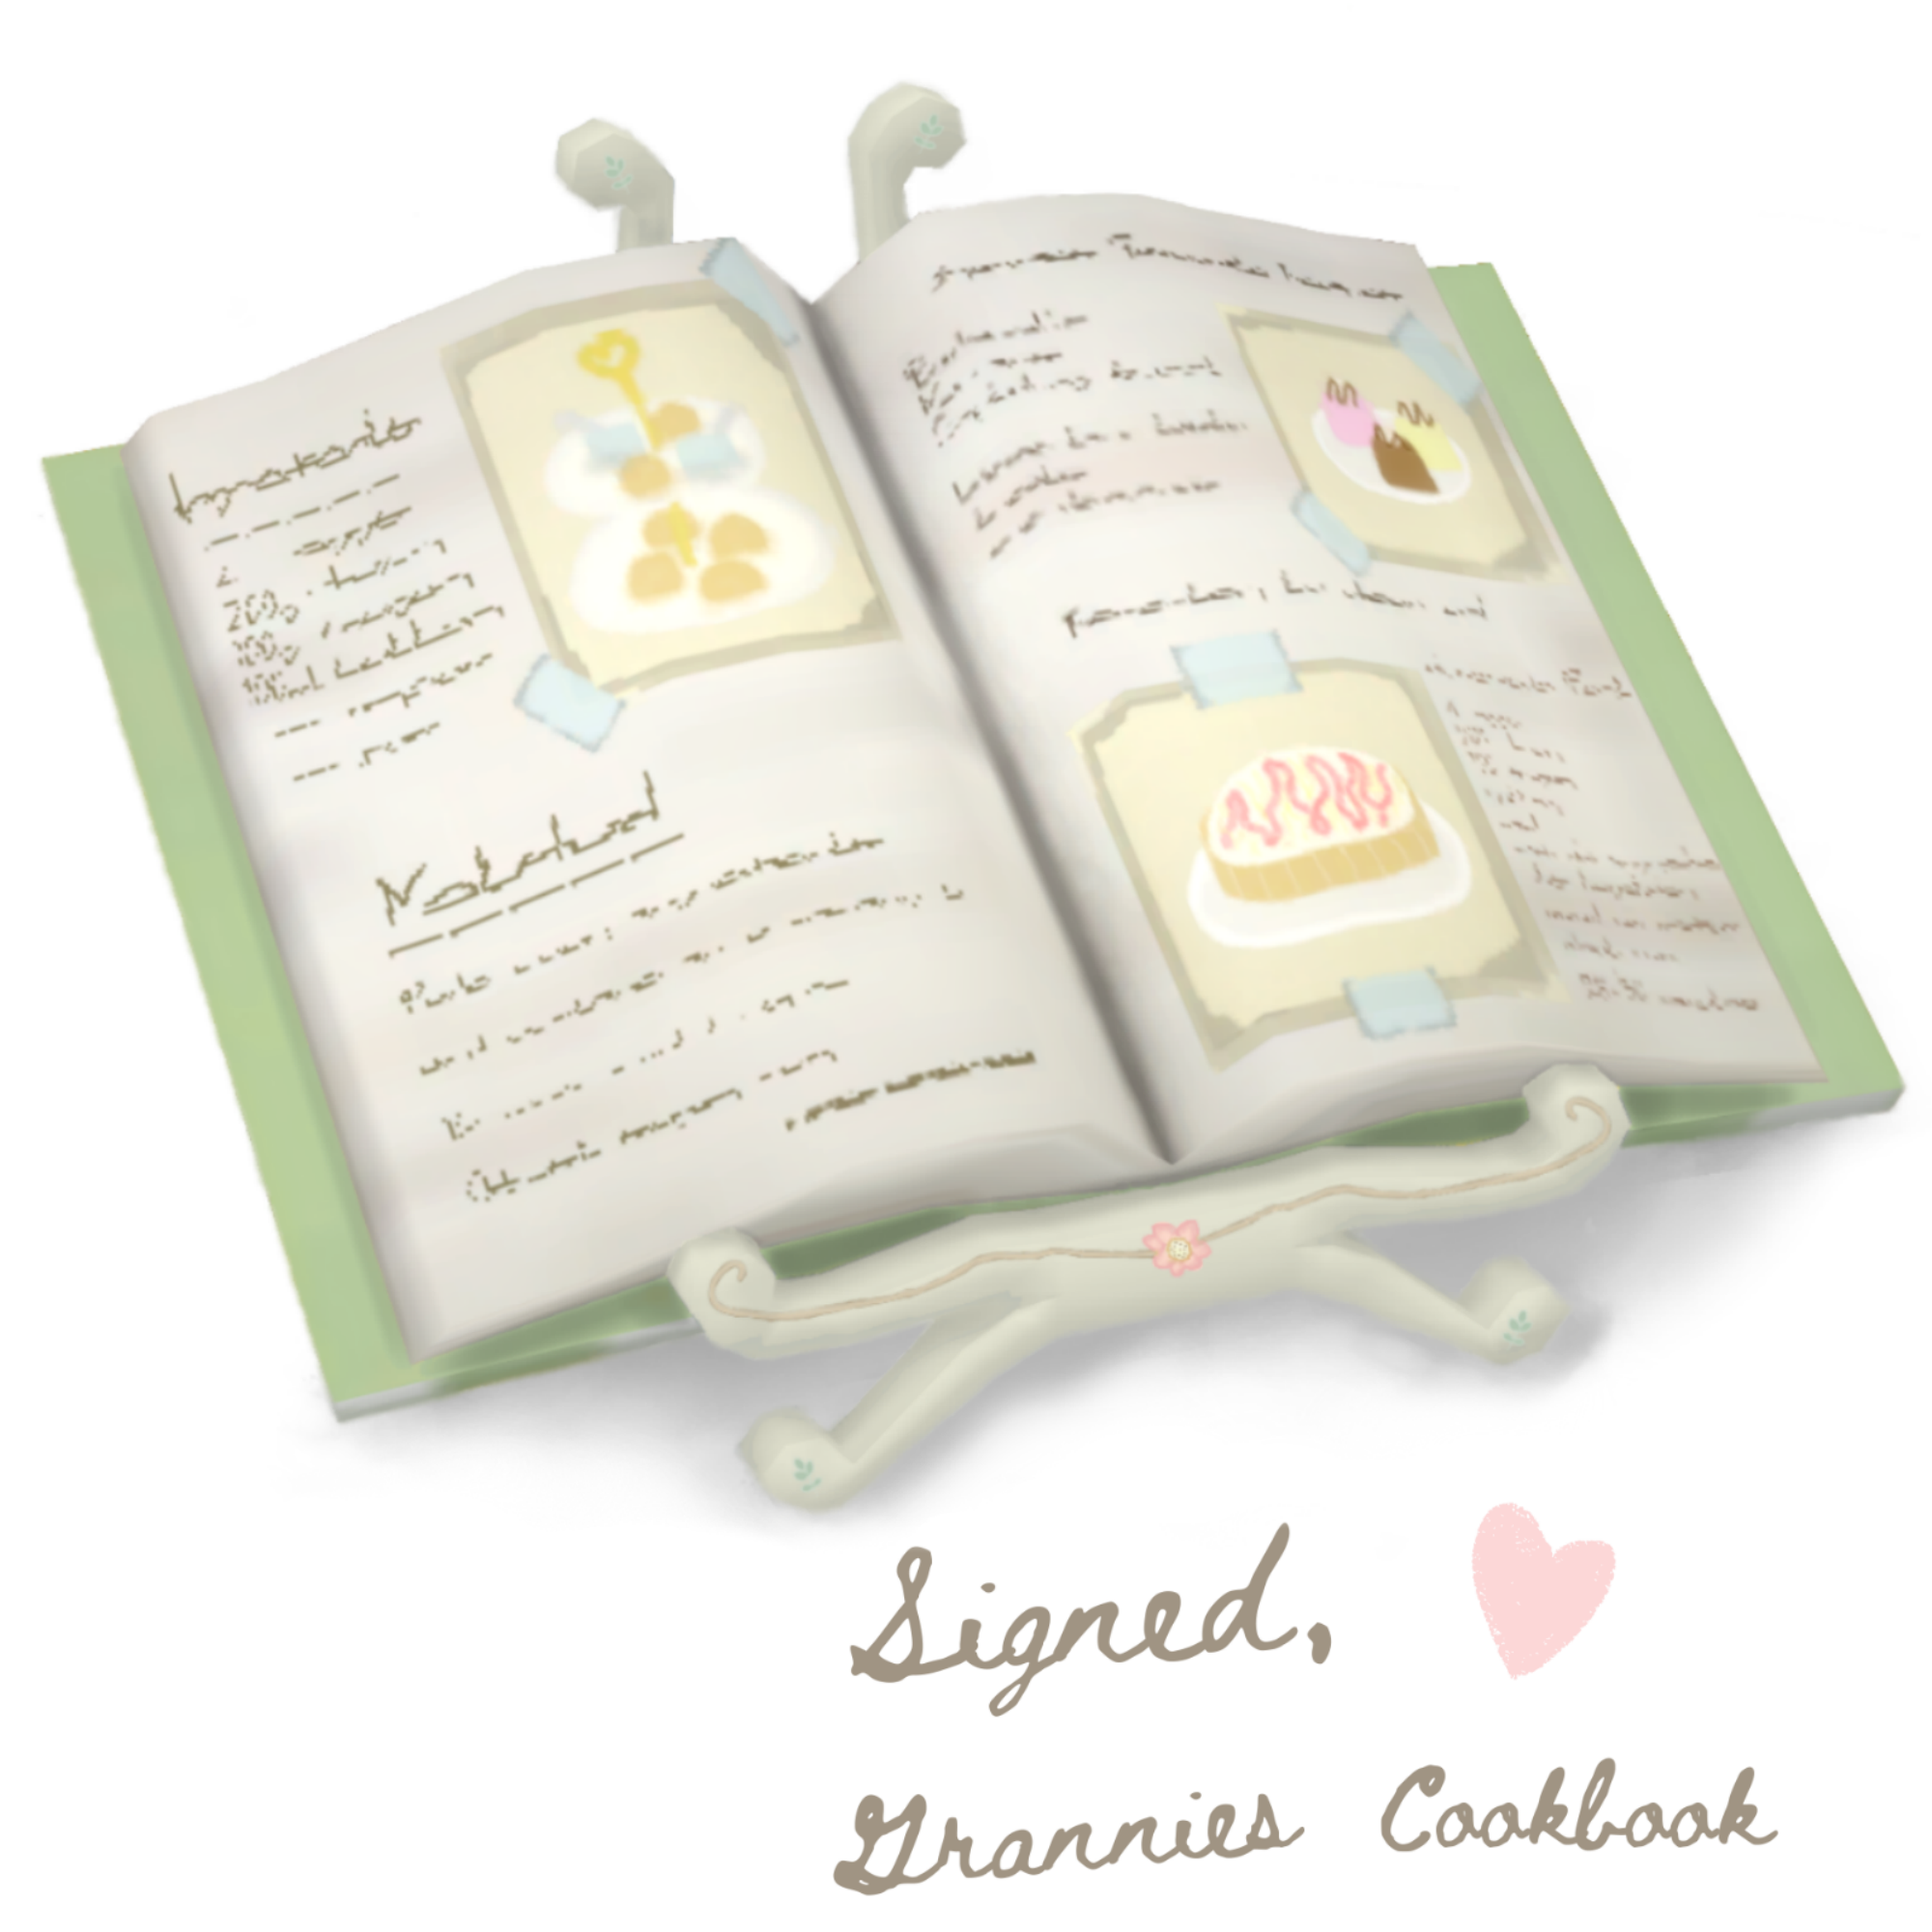 Grannies Cookbook (BASIC) project avatar